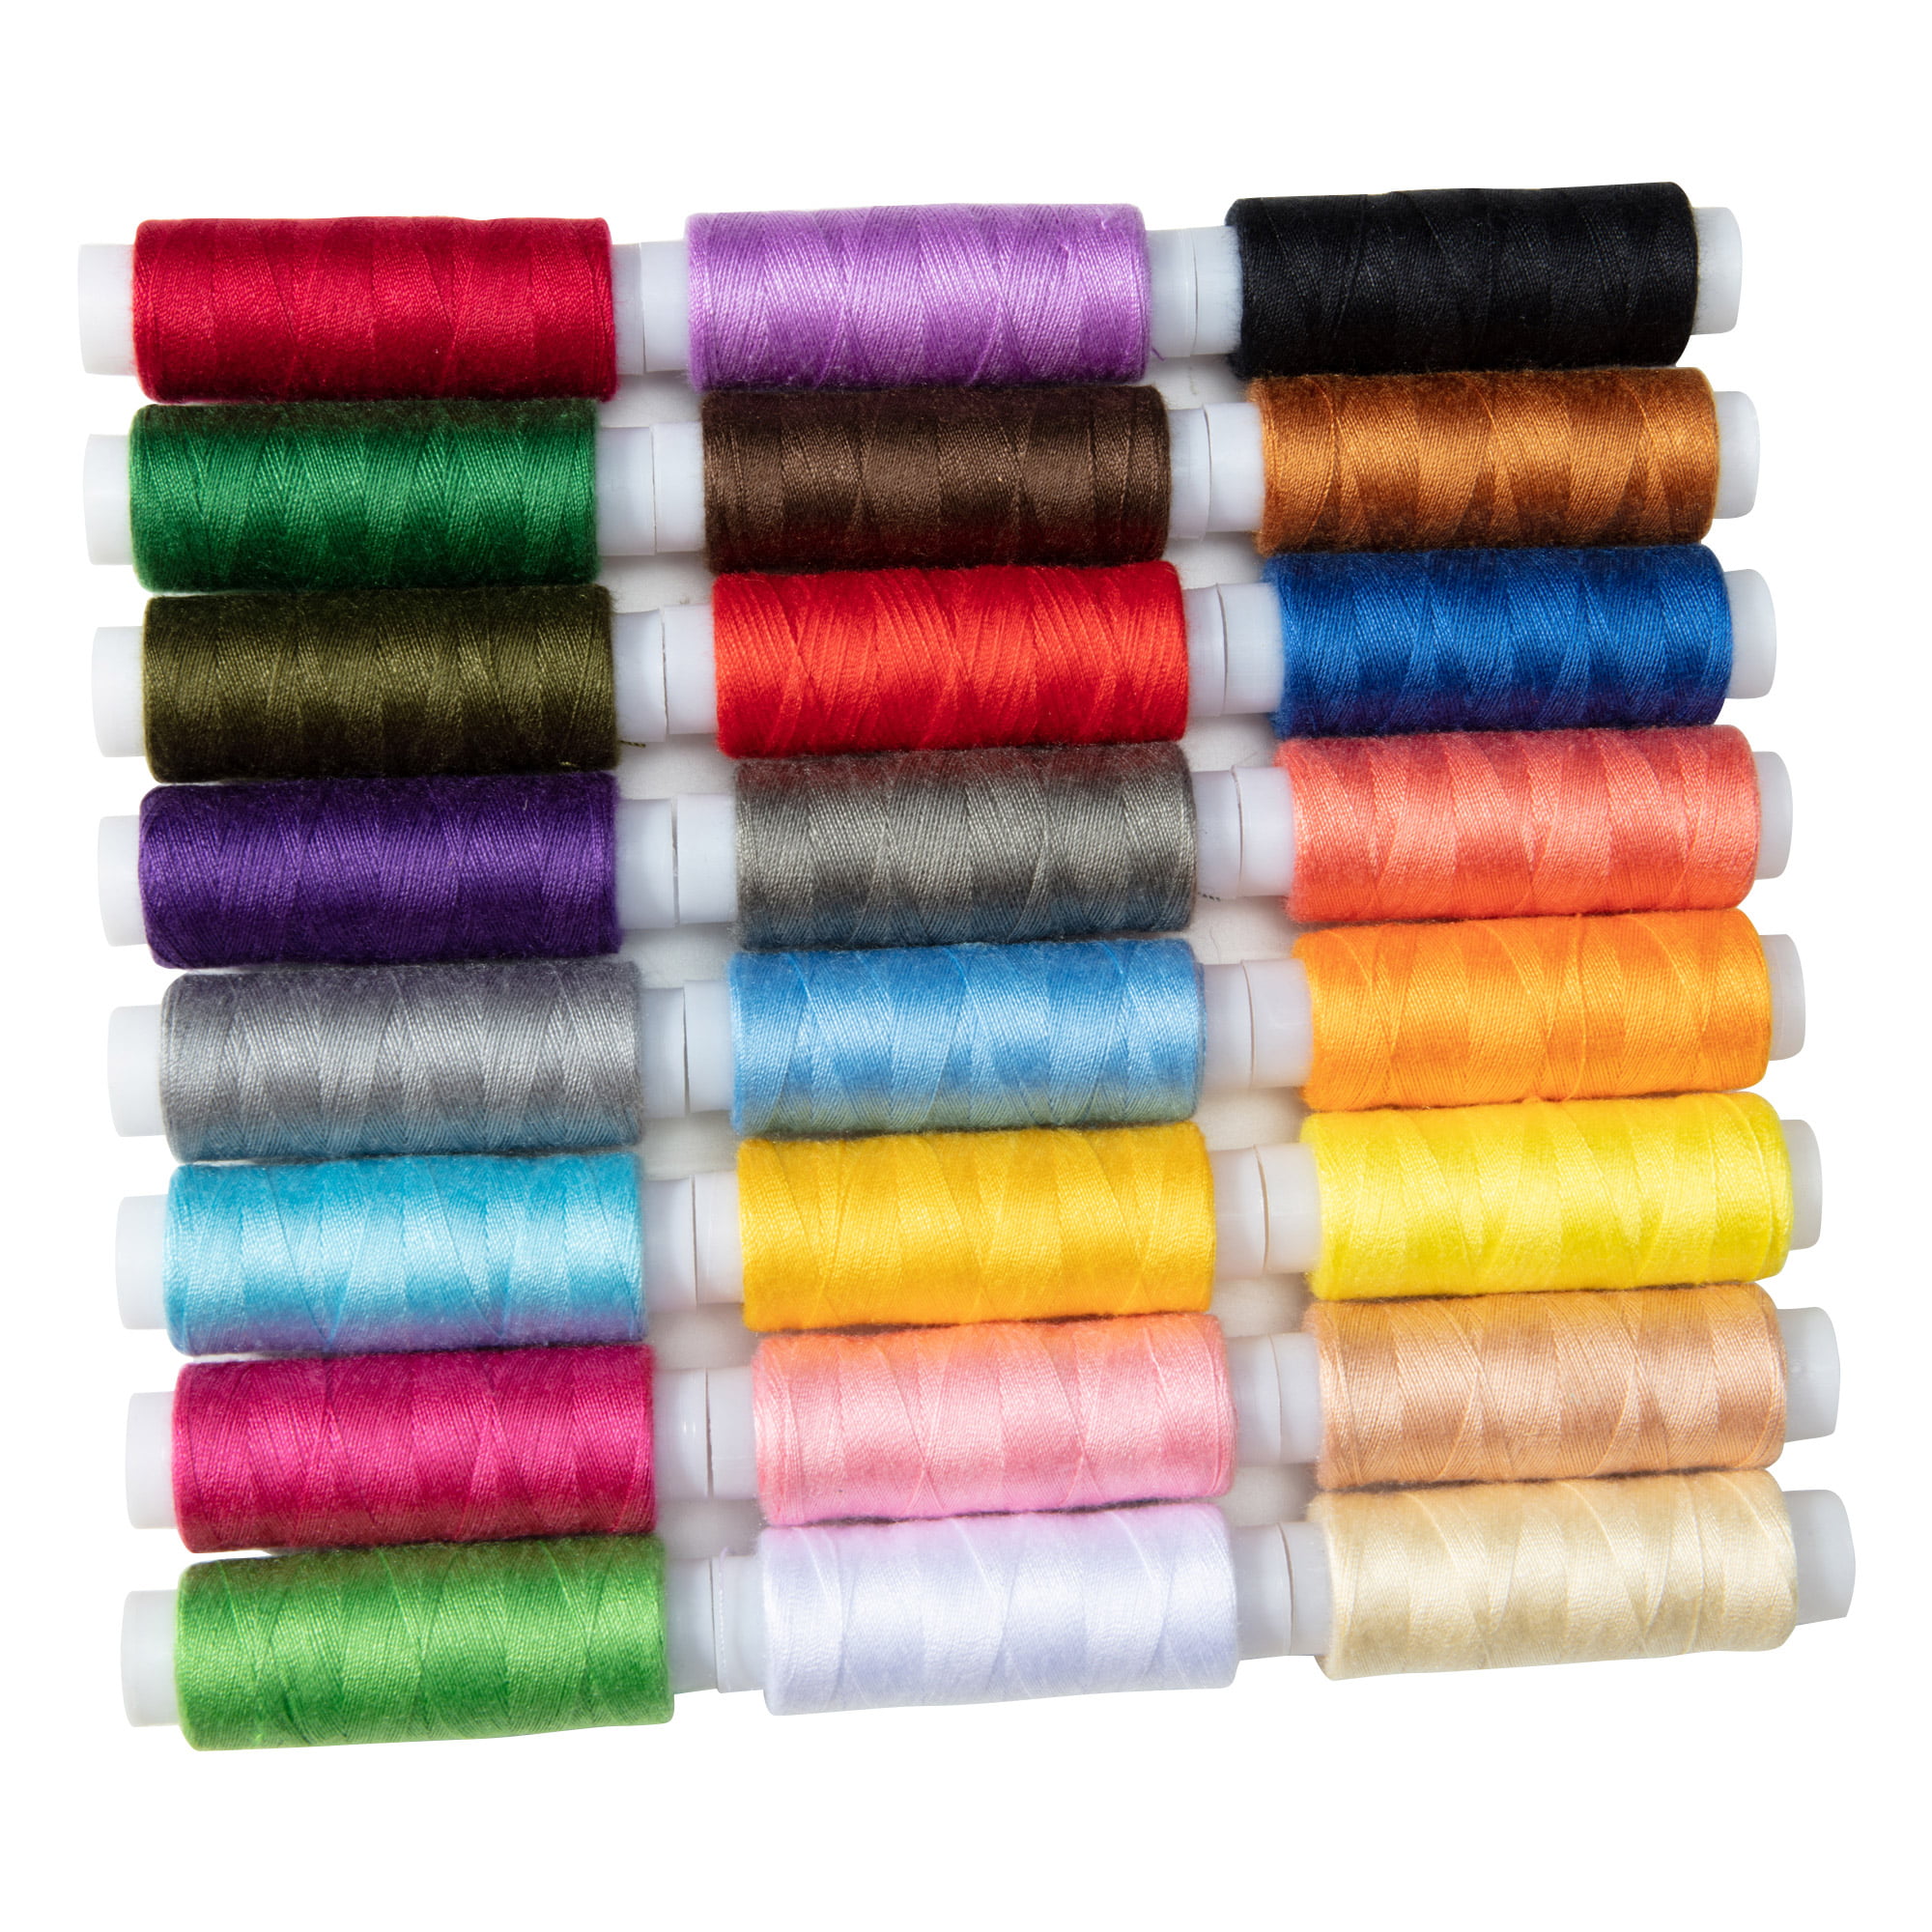 Khaki ALL PURPOSE THREAD 100% Polyester Sewing Thread 3 Spools 200 Yards  per Spool 162m 14 Colors Paulabcrafts 